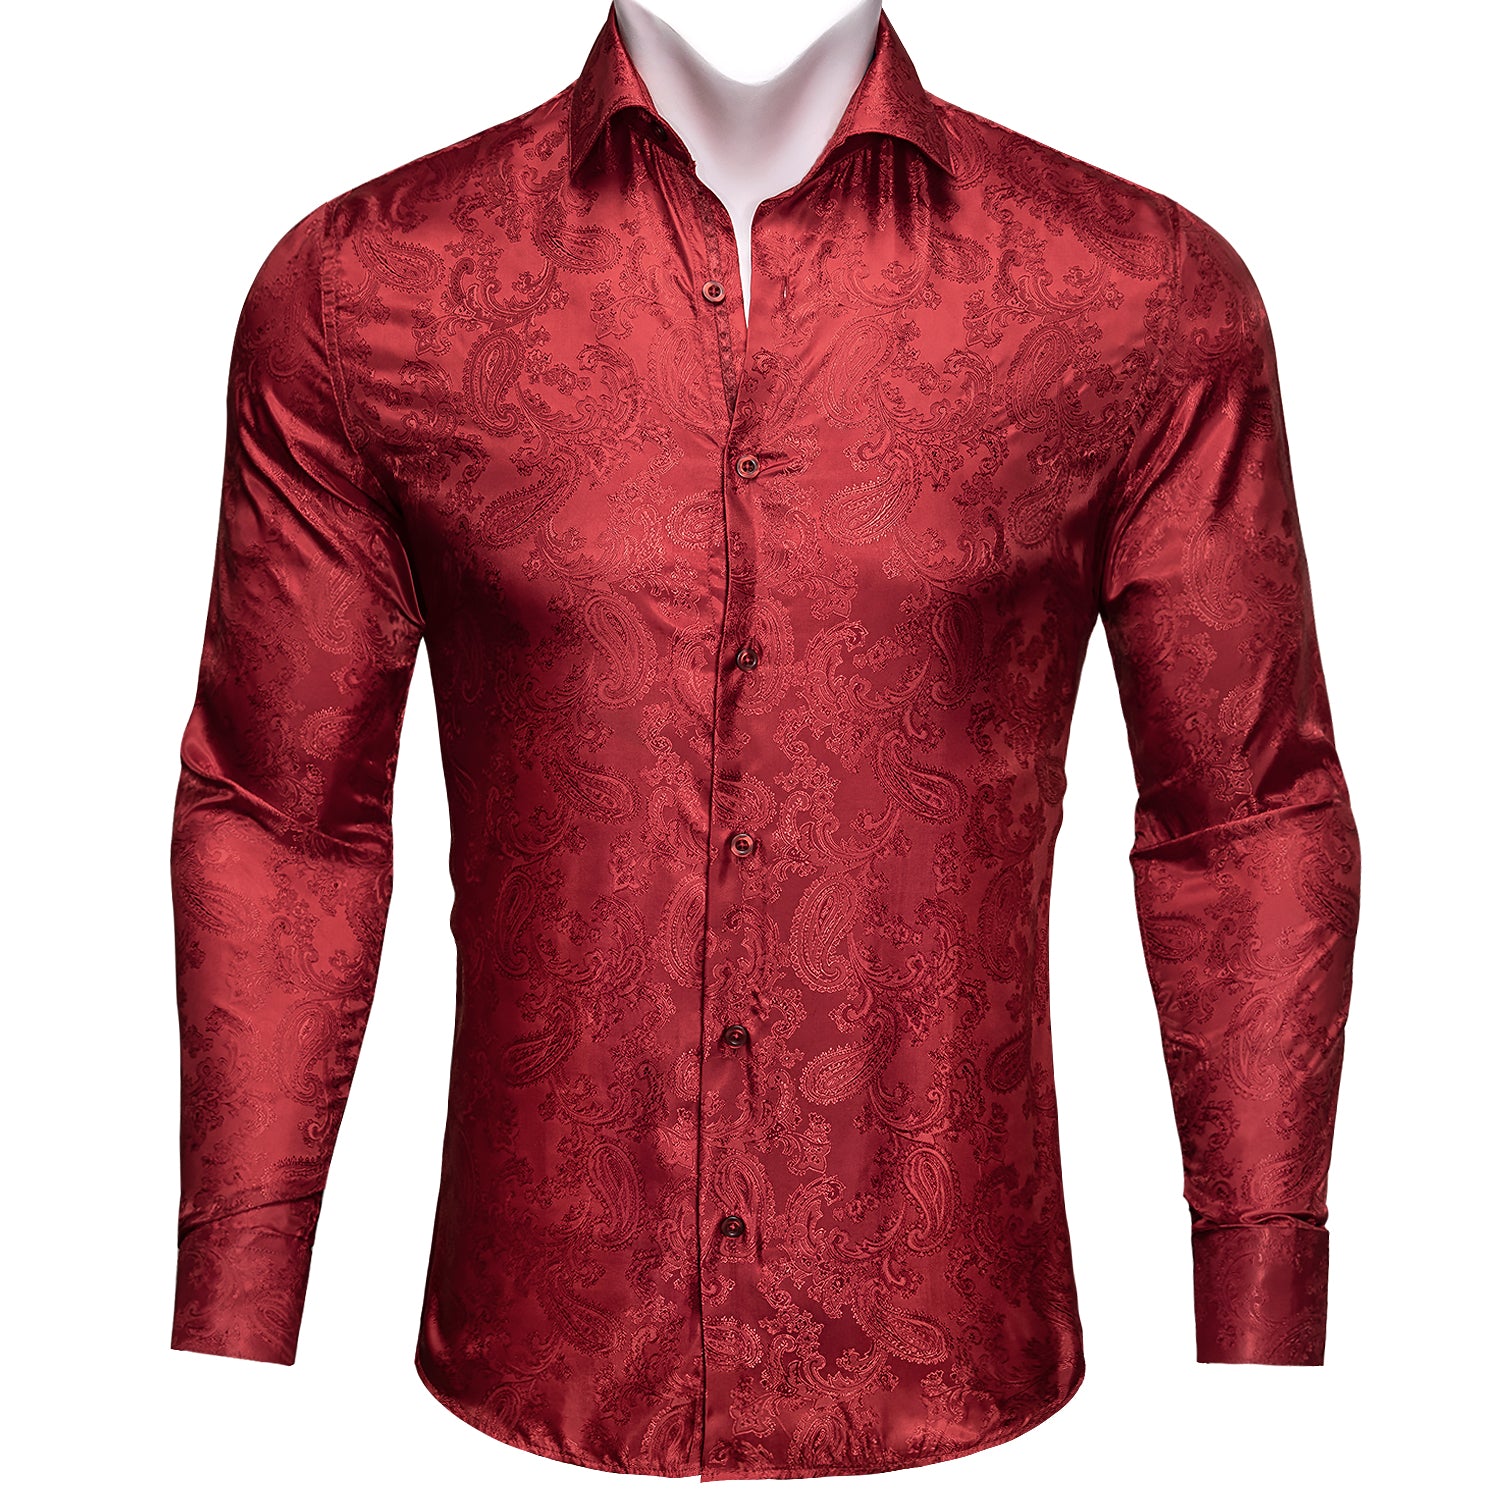 Red stretch fabric dress shirts